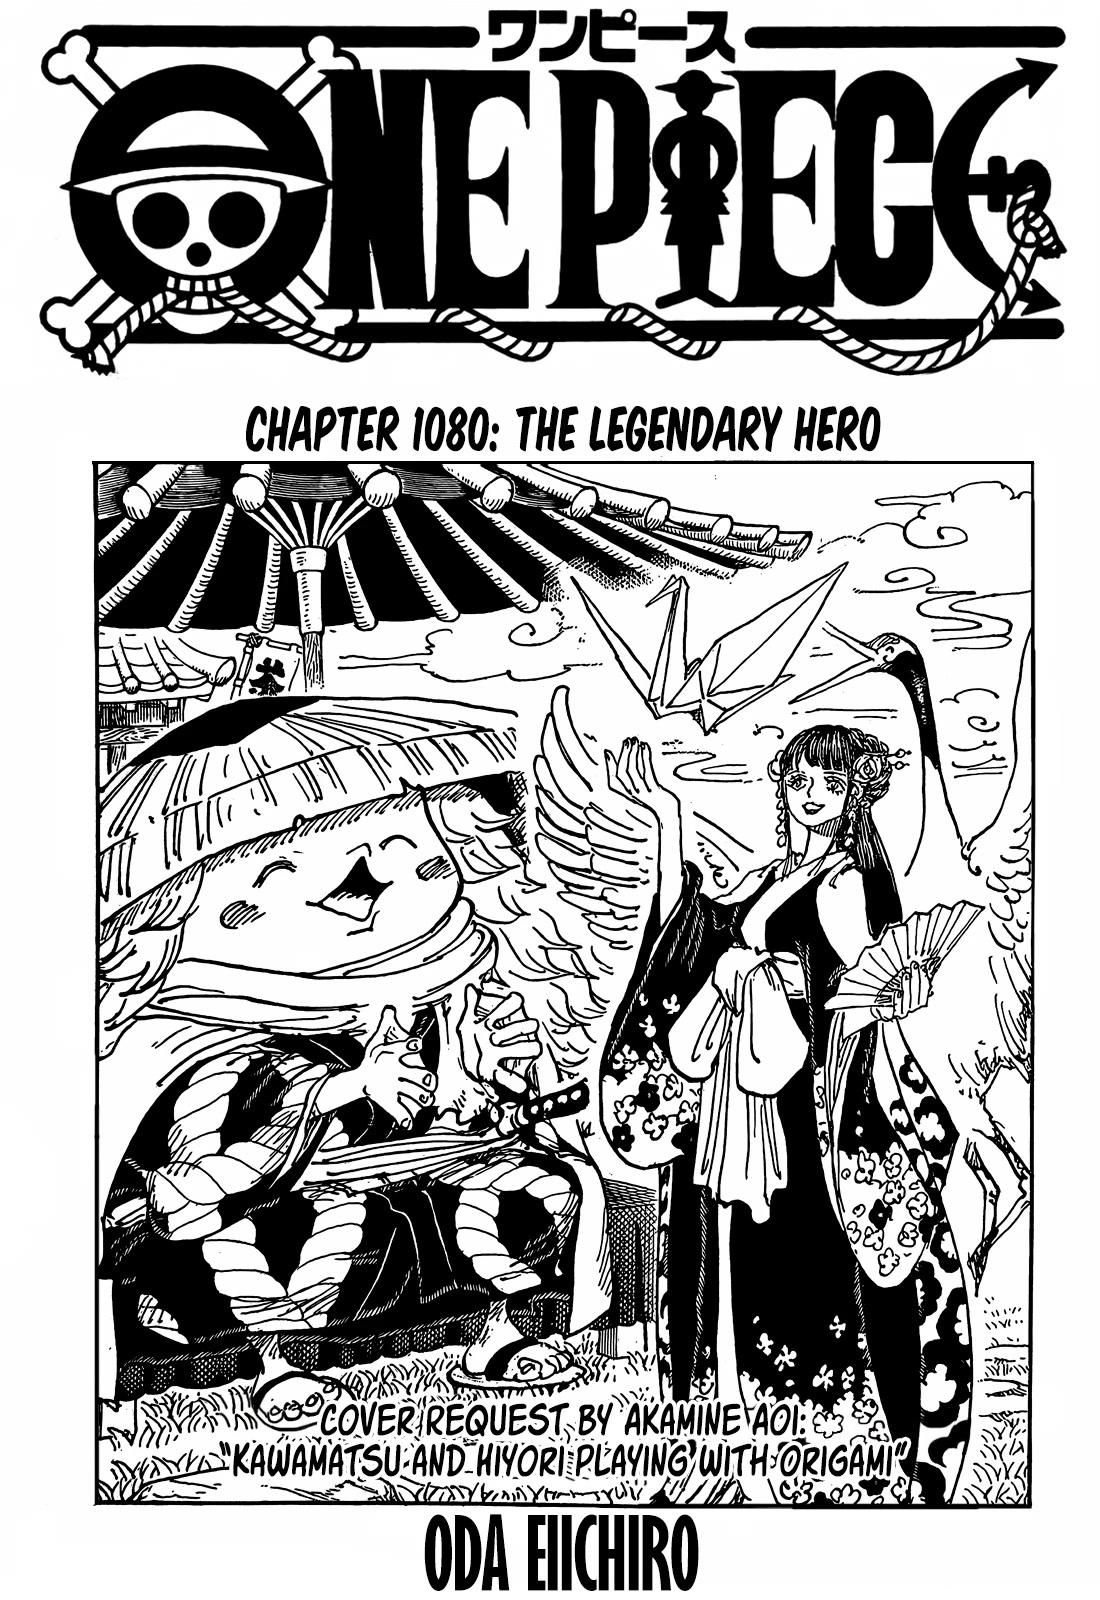 Read One Piece Chapter 1080: The Legendary Hero On Mangakakalot